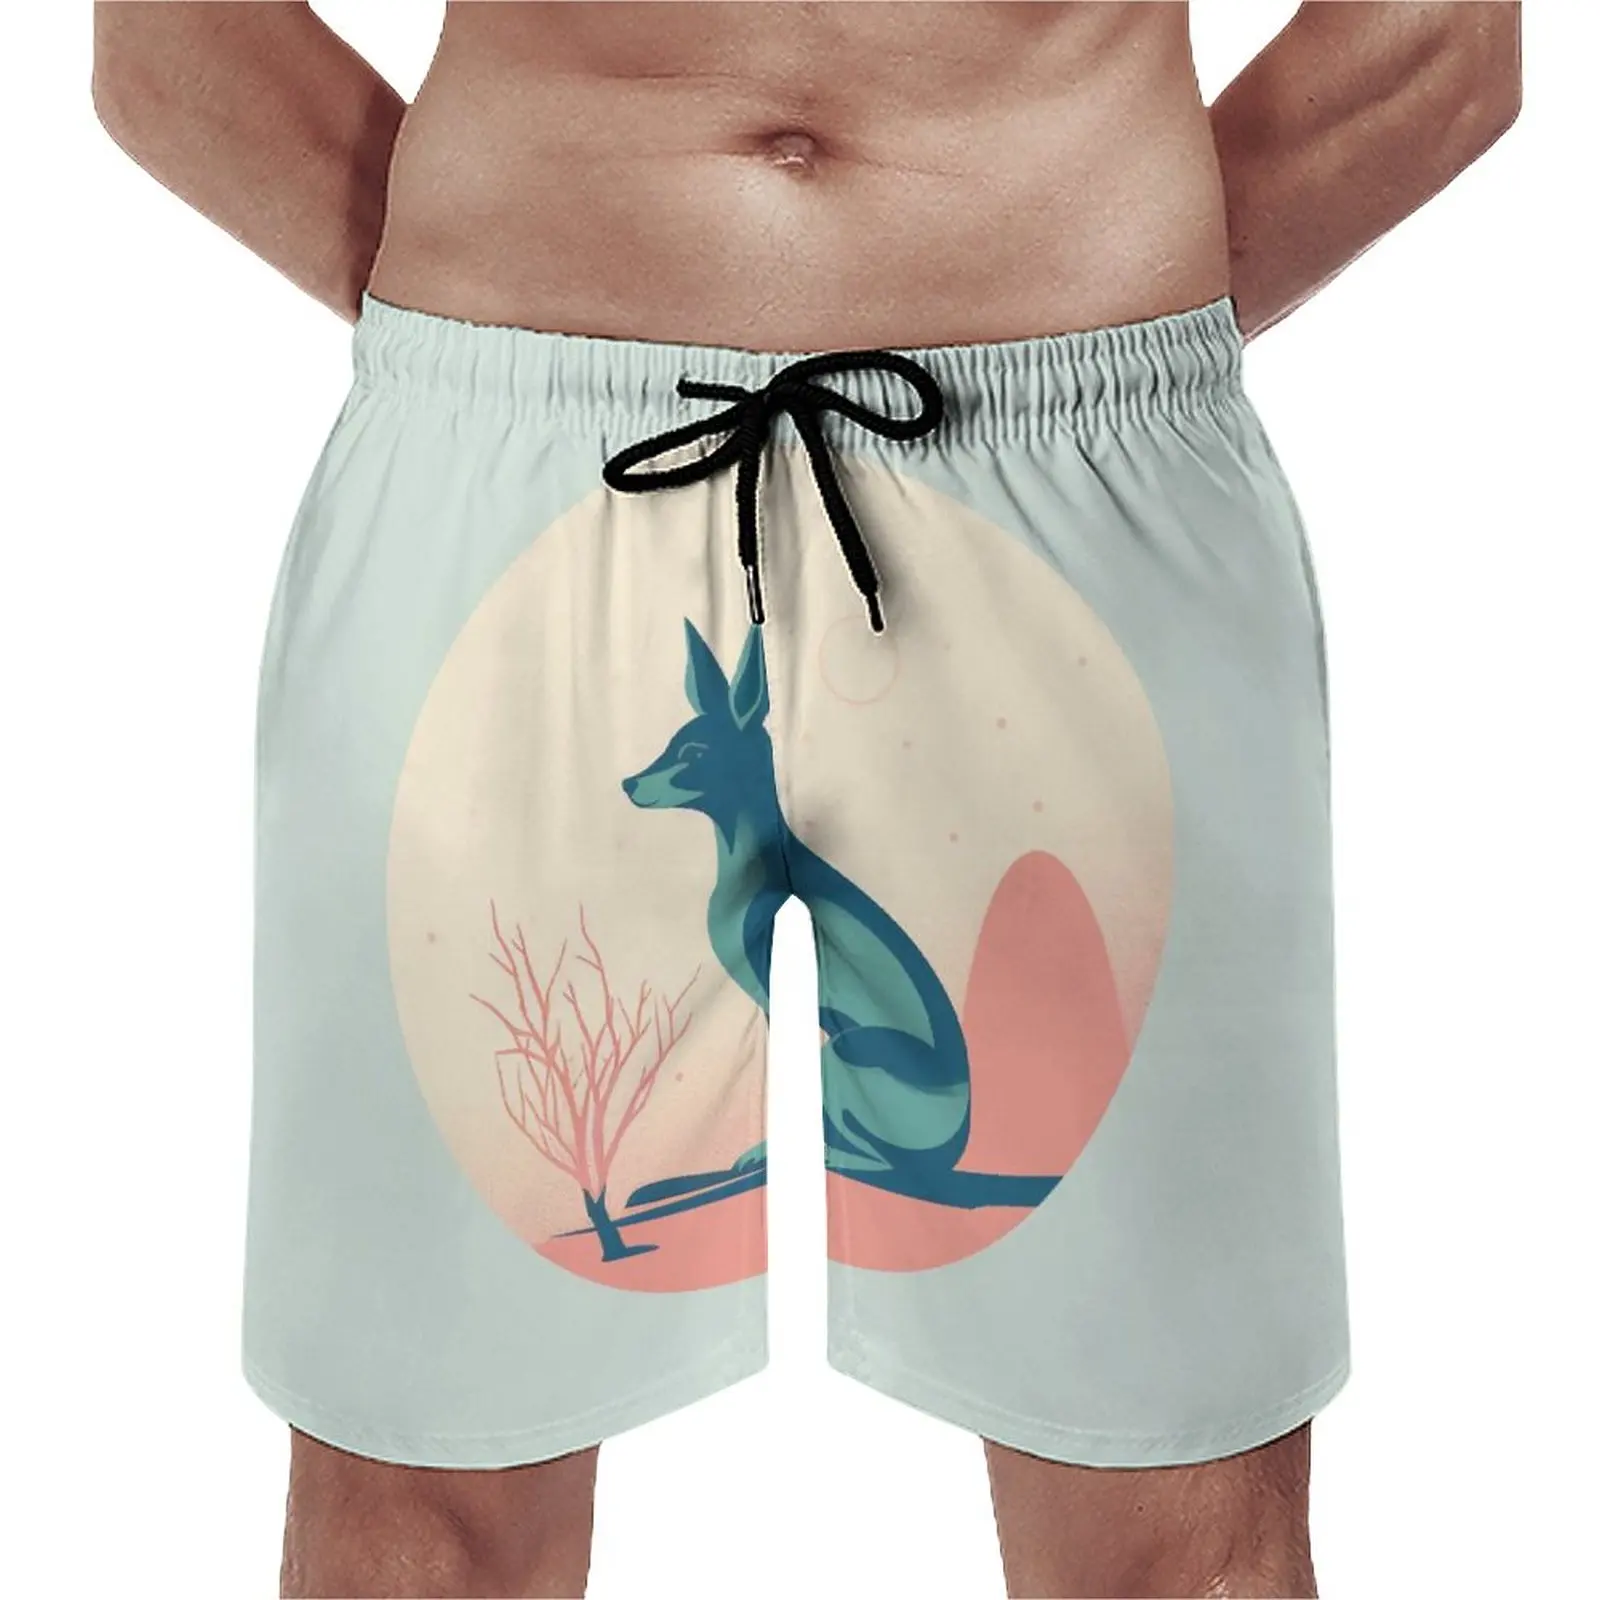 

Kangaroo Board Shorts Simple Circle Minimalistic Classic Beach Short Pants Male Printed Surfing Comfortable Swim Trunks Gift